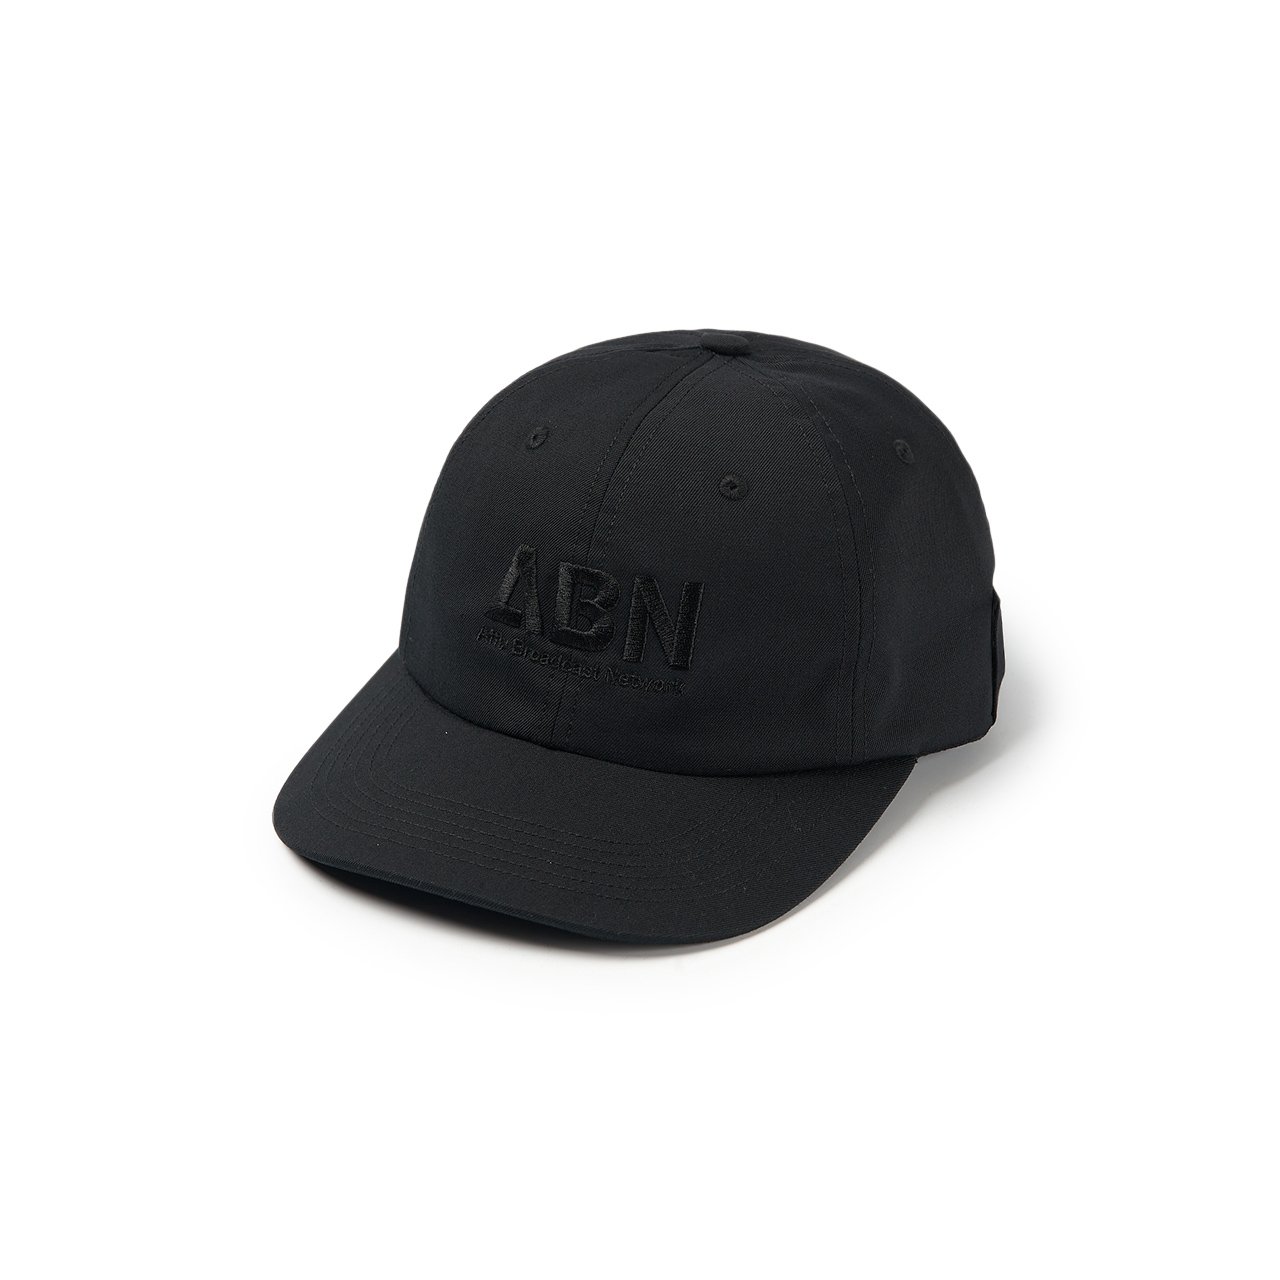 affix works affix works 85db earplug cap (black)